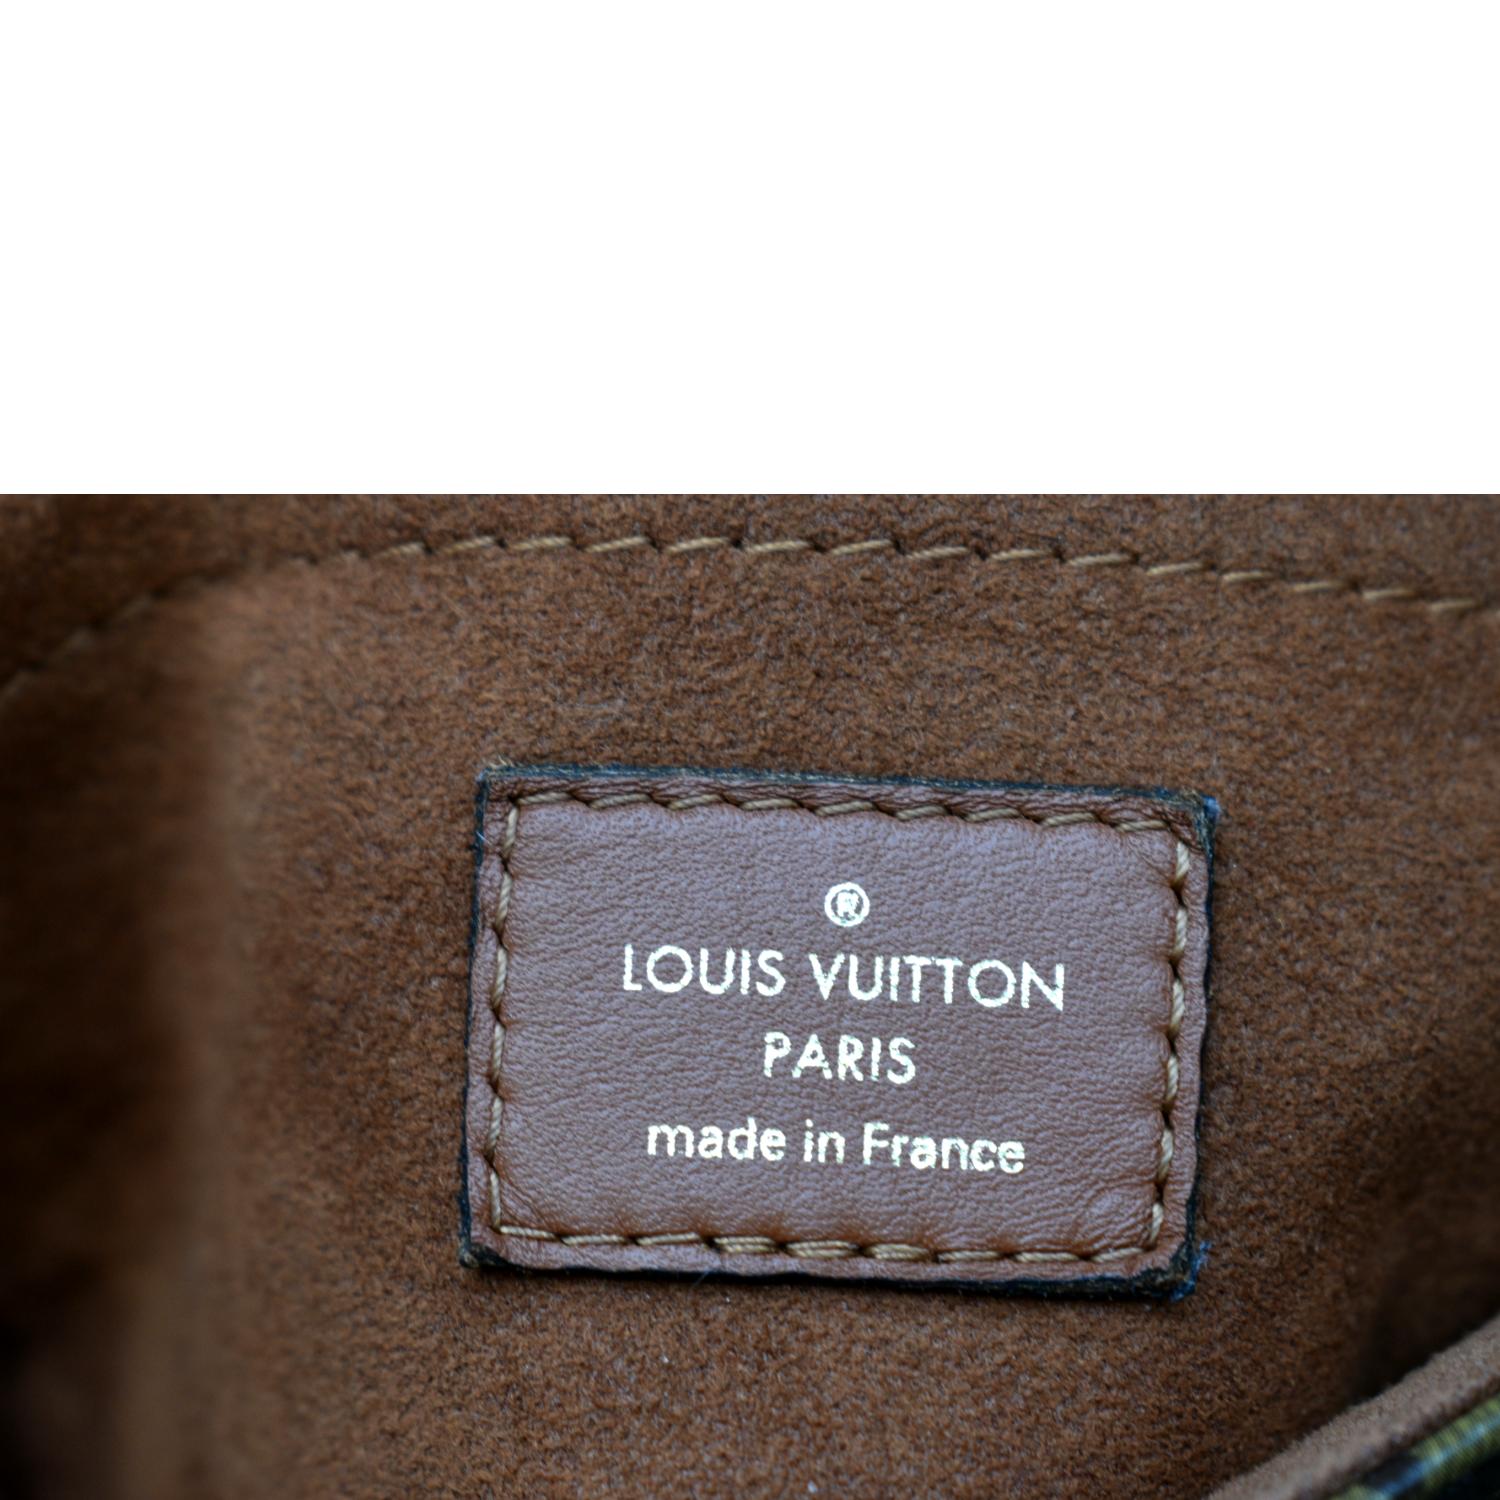 M44321 Louis Vuitton Monogram Canvas Locky BB-Bleu Jean